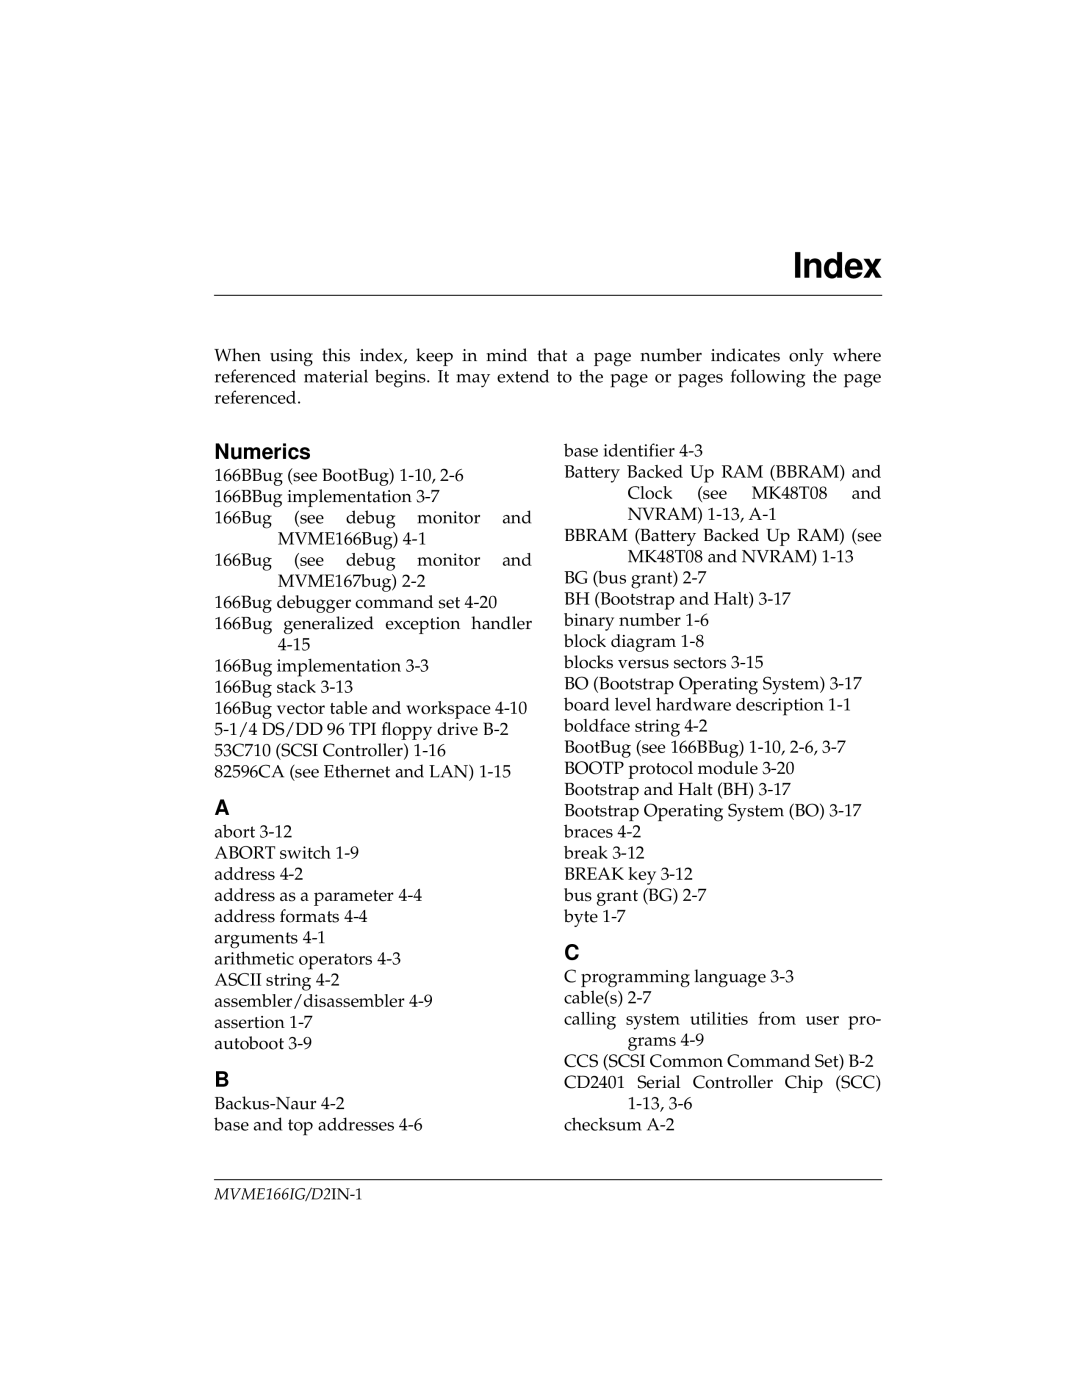 Motorola MVME166IG/D2 manual Index, Numerics 